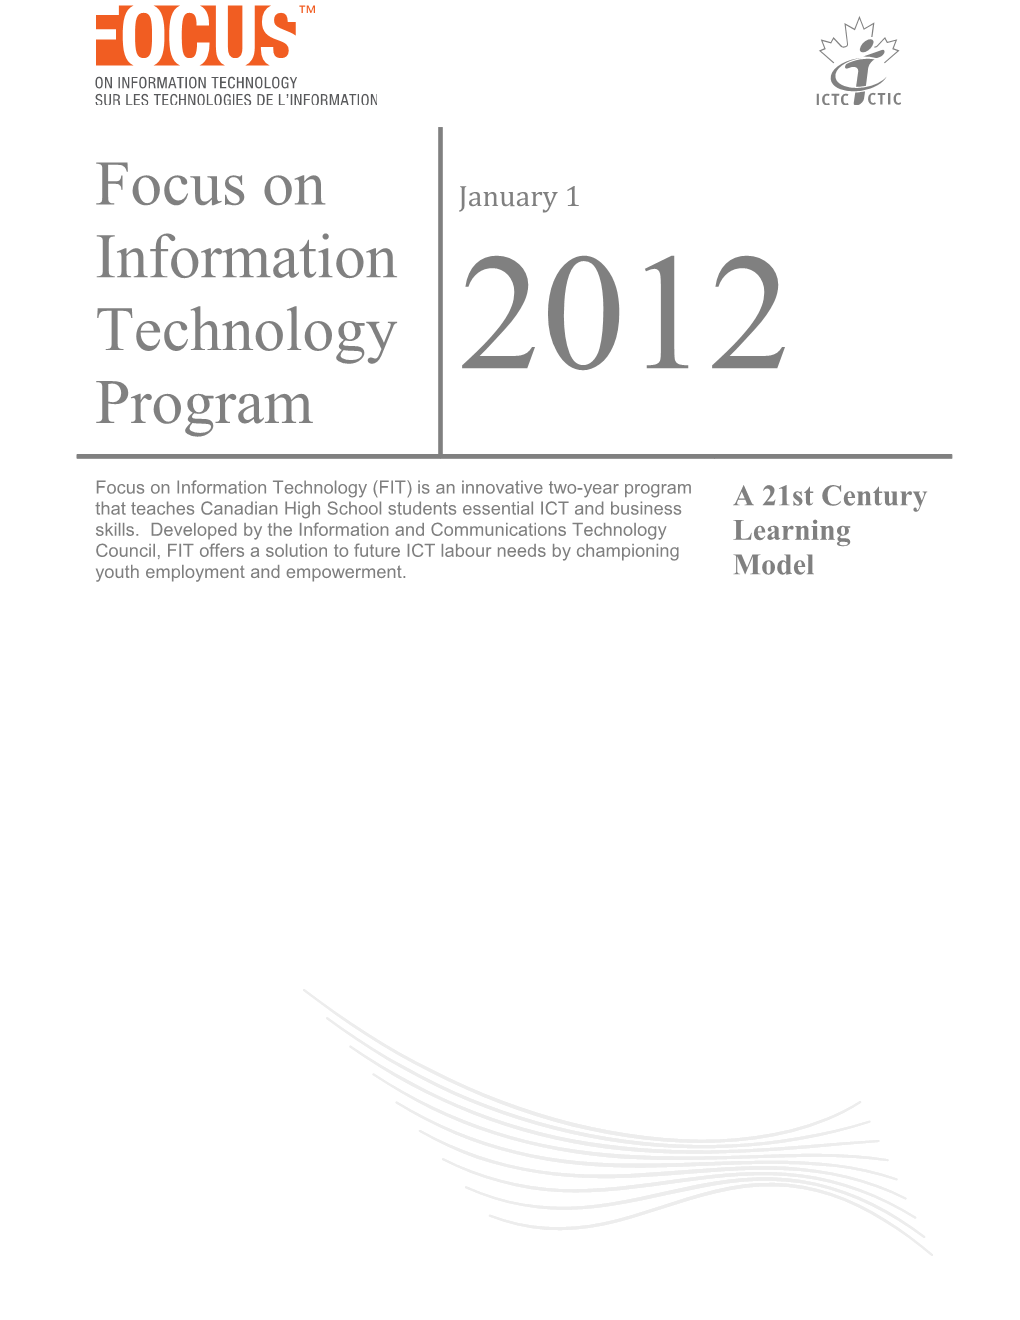 Focus on Information Technology Program